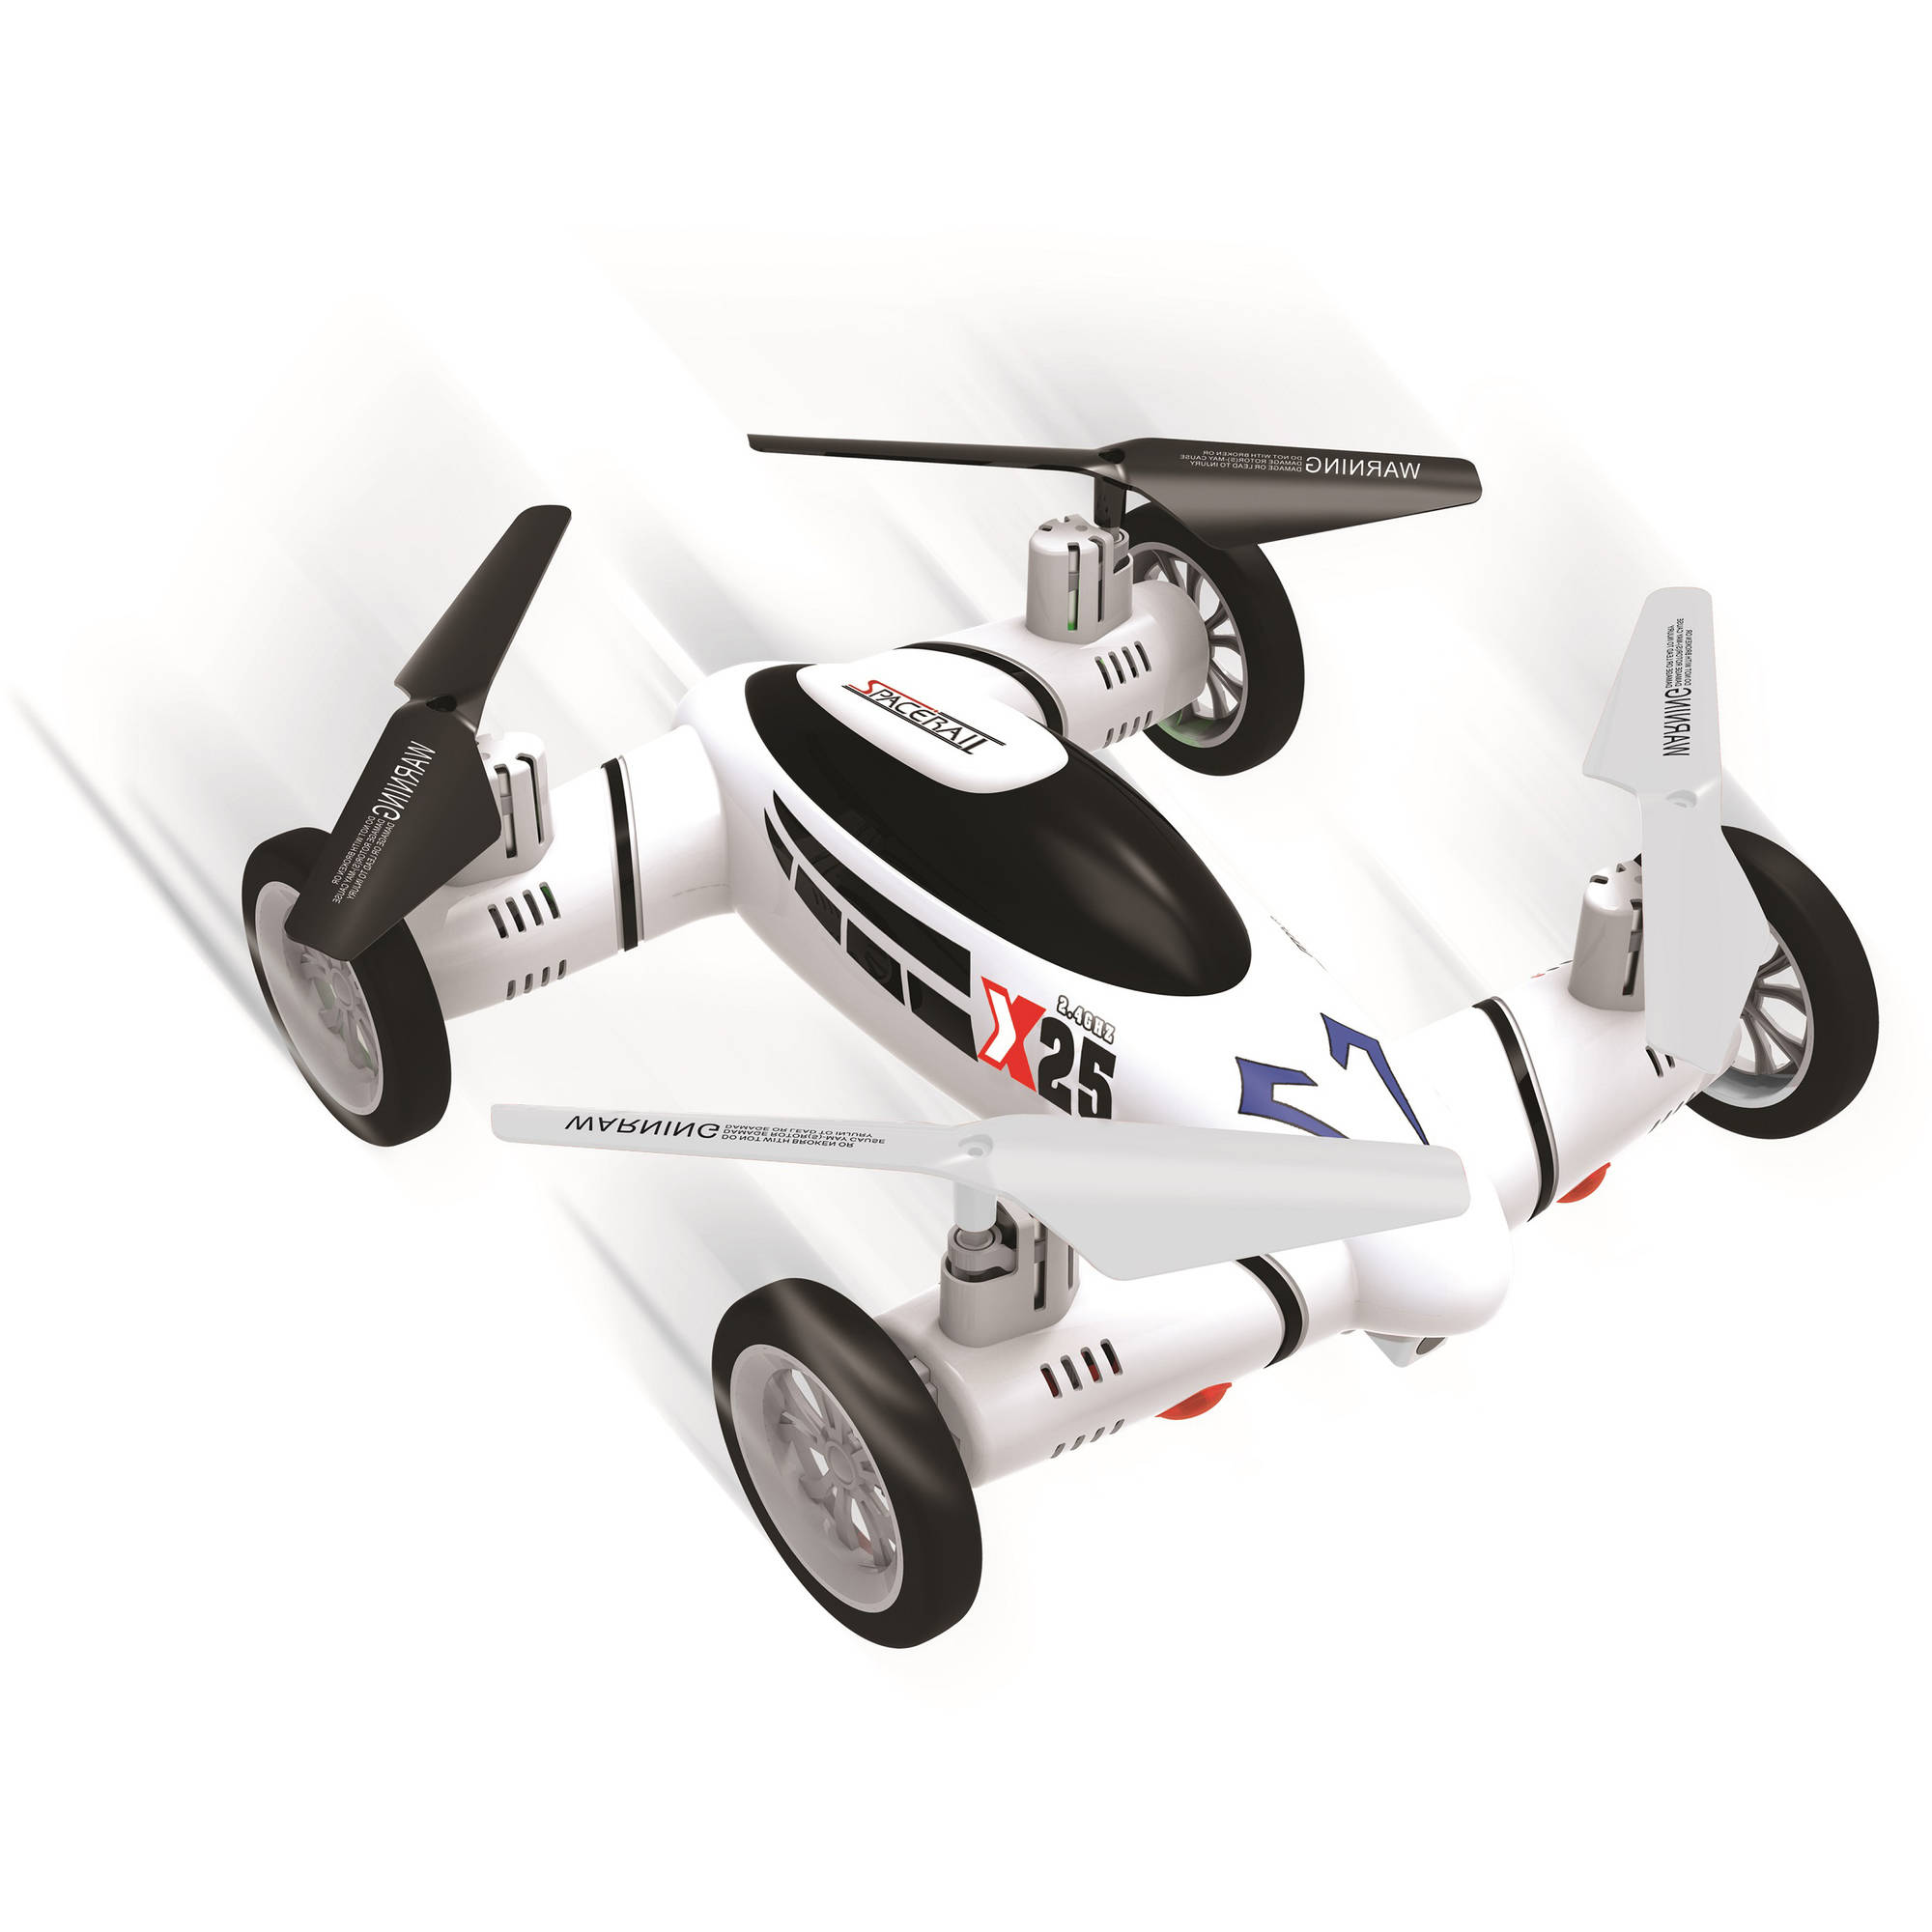 Spacerails 2.4 GHz RC Flying Car - image 1 of 1